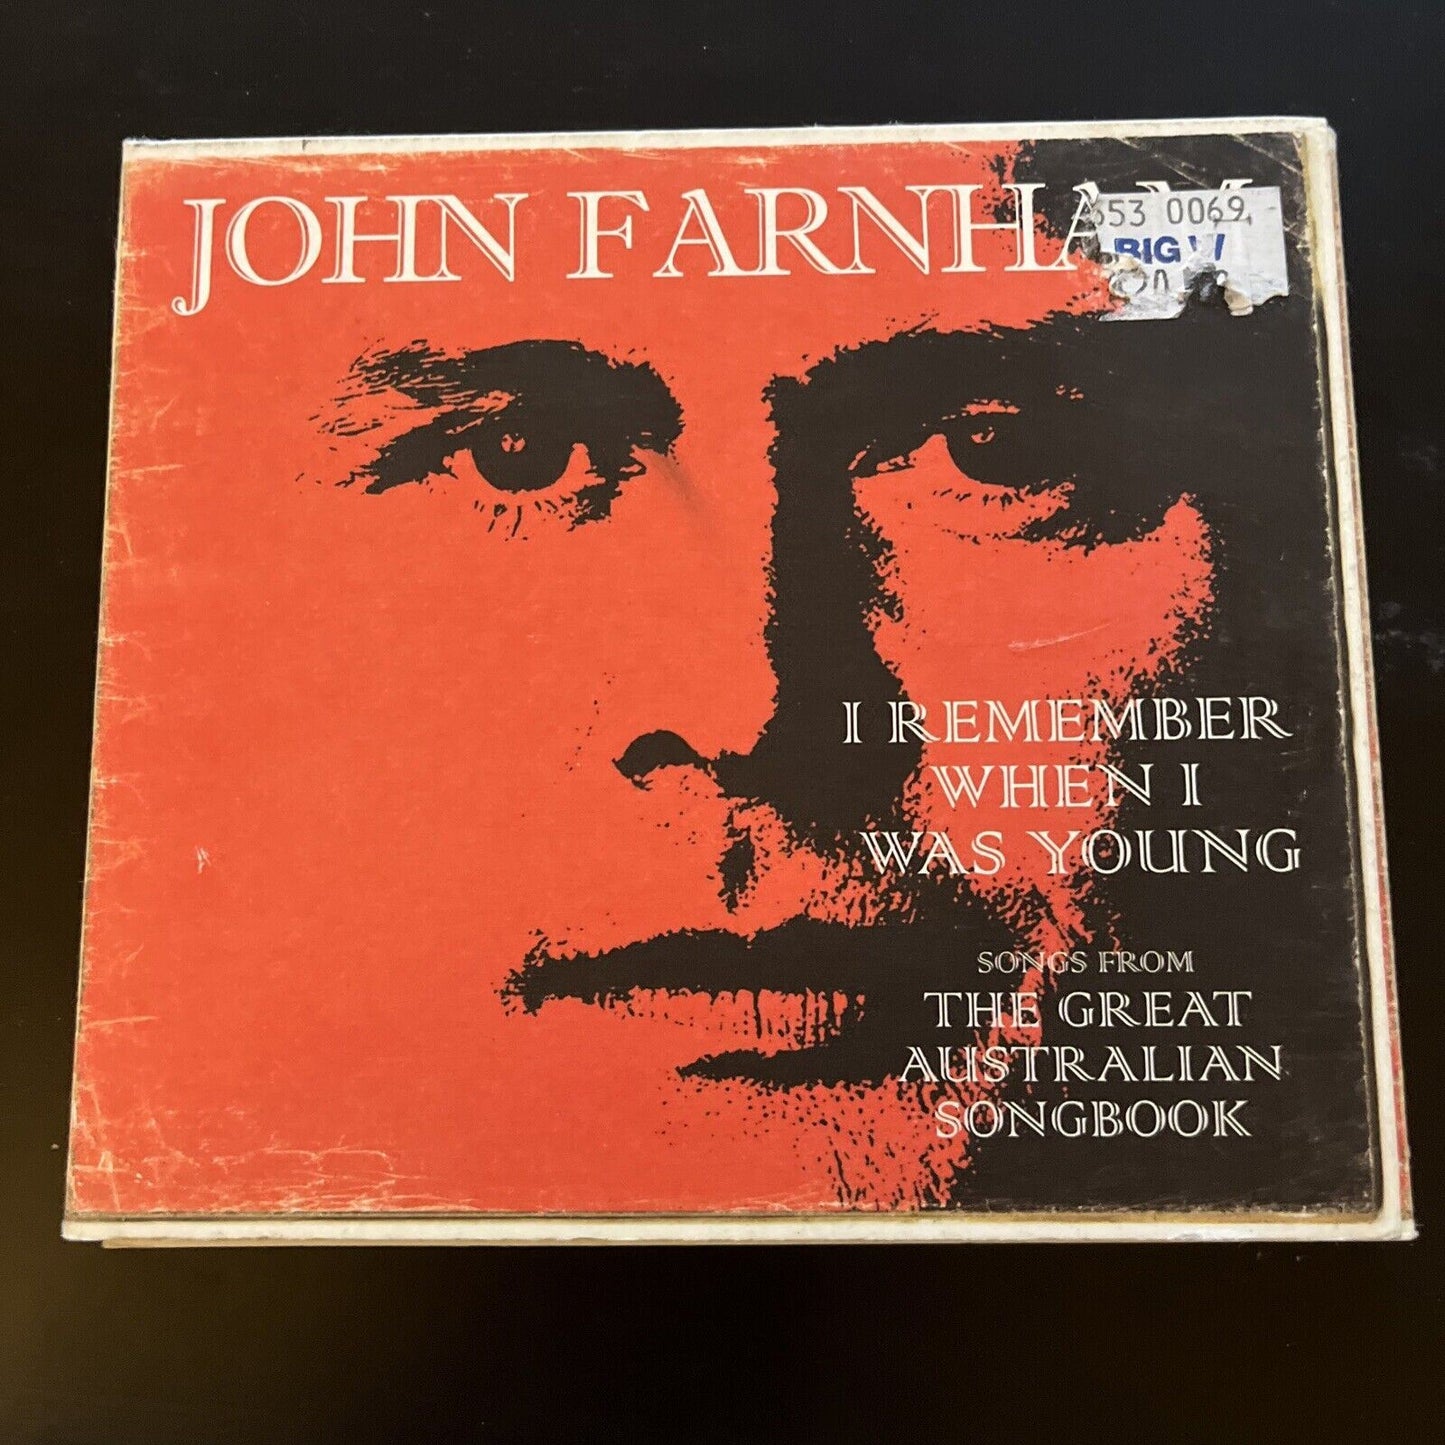 John Farnham - I Remember When I Was Young (CD, 2005)